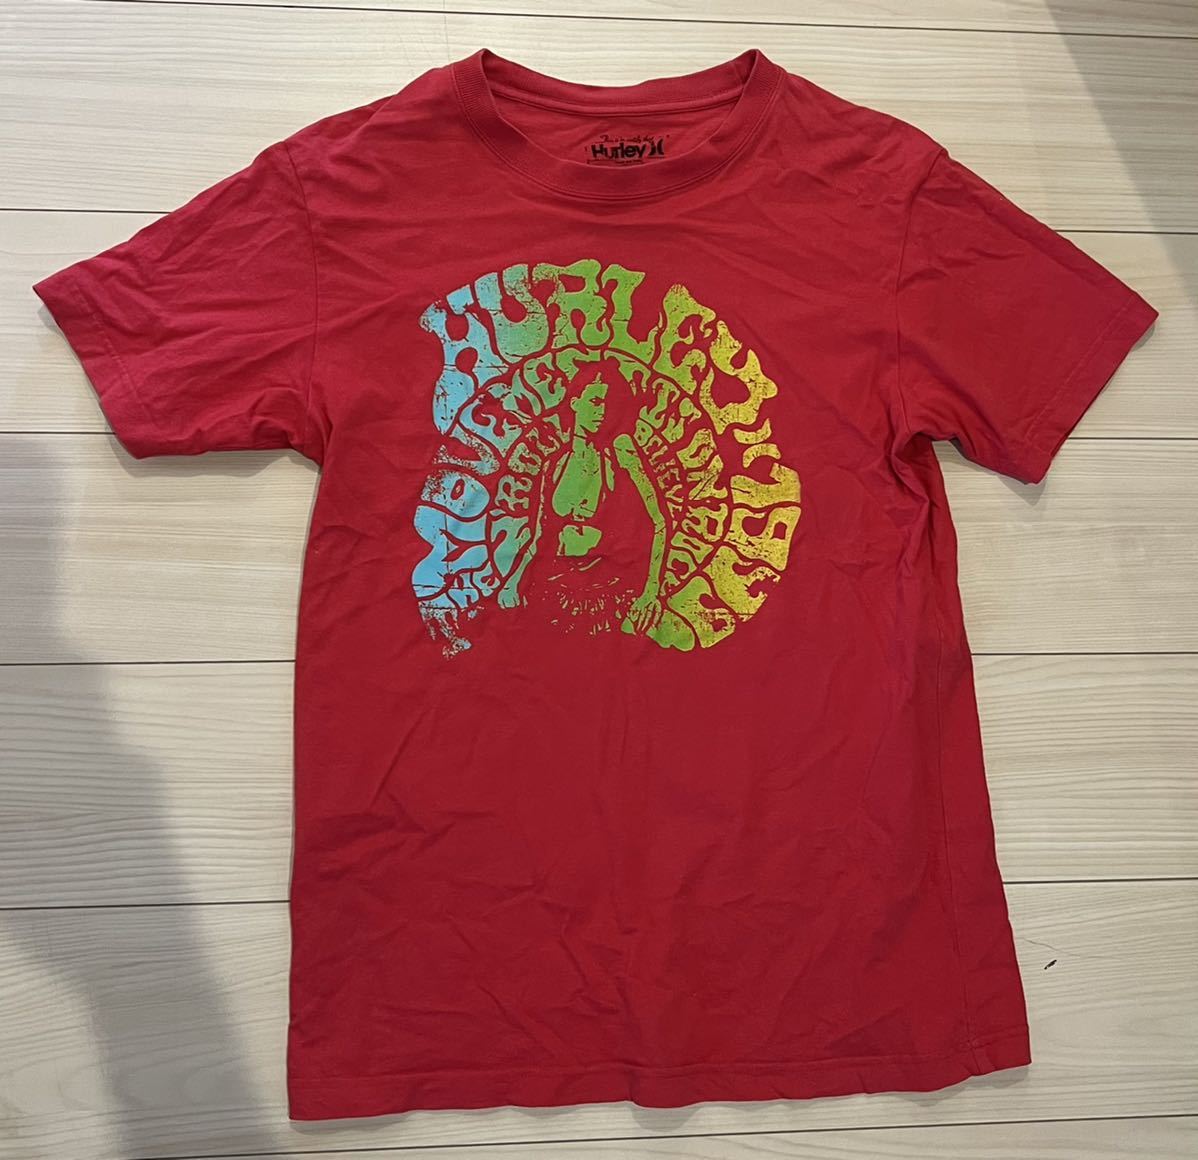  Harley hurley короткий рукав футболка дизайн футболка M размер 